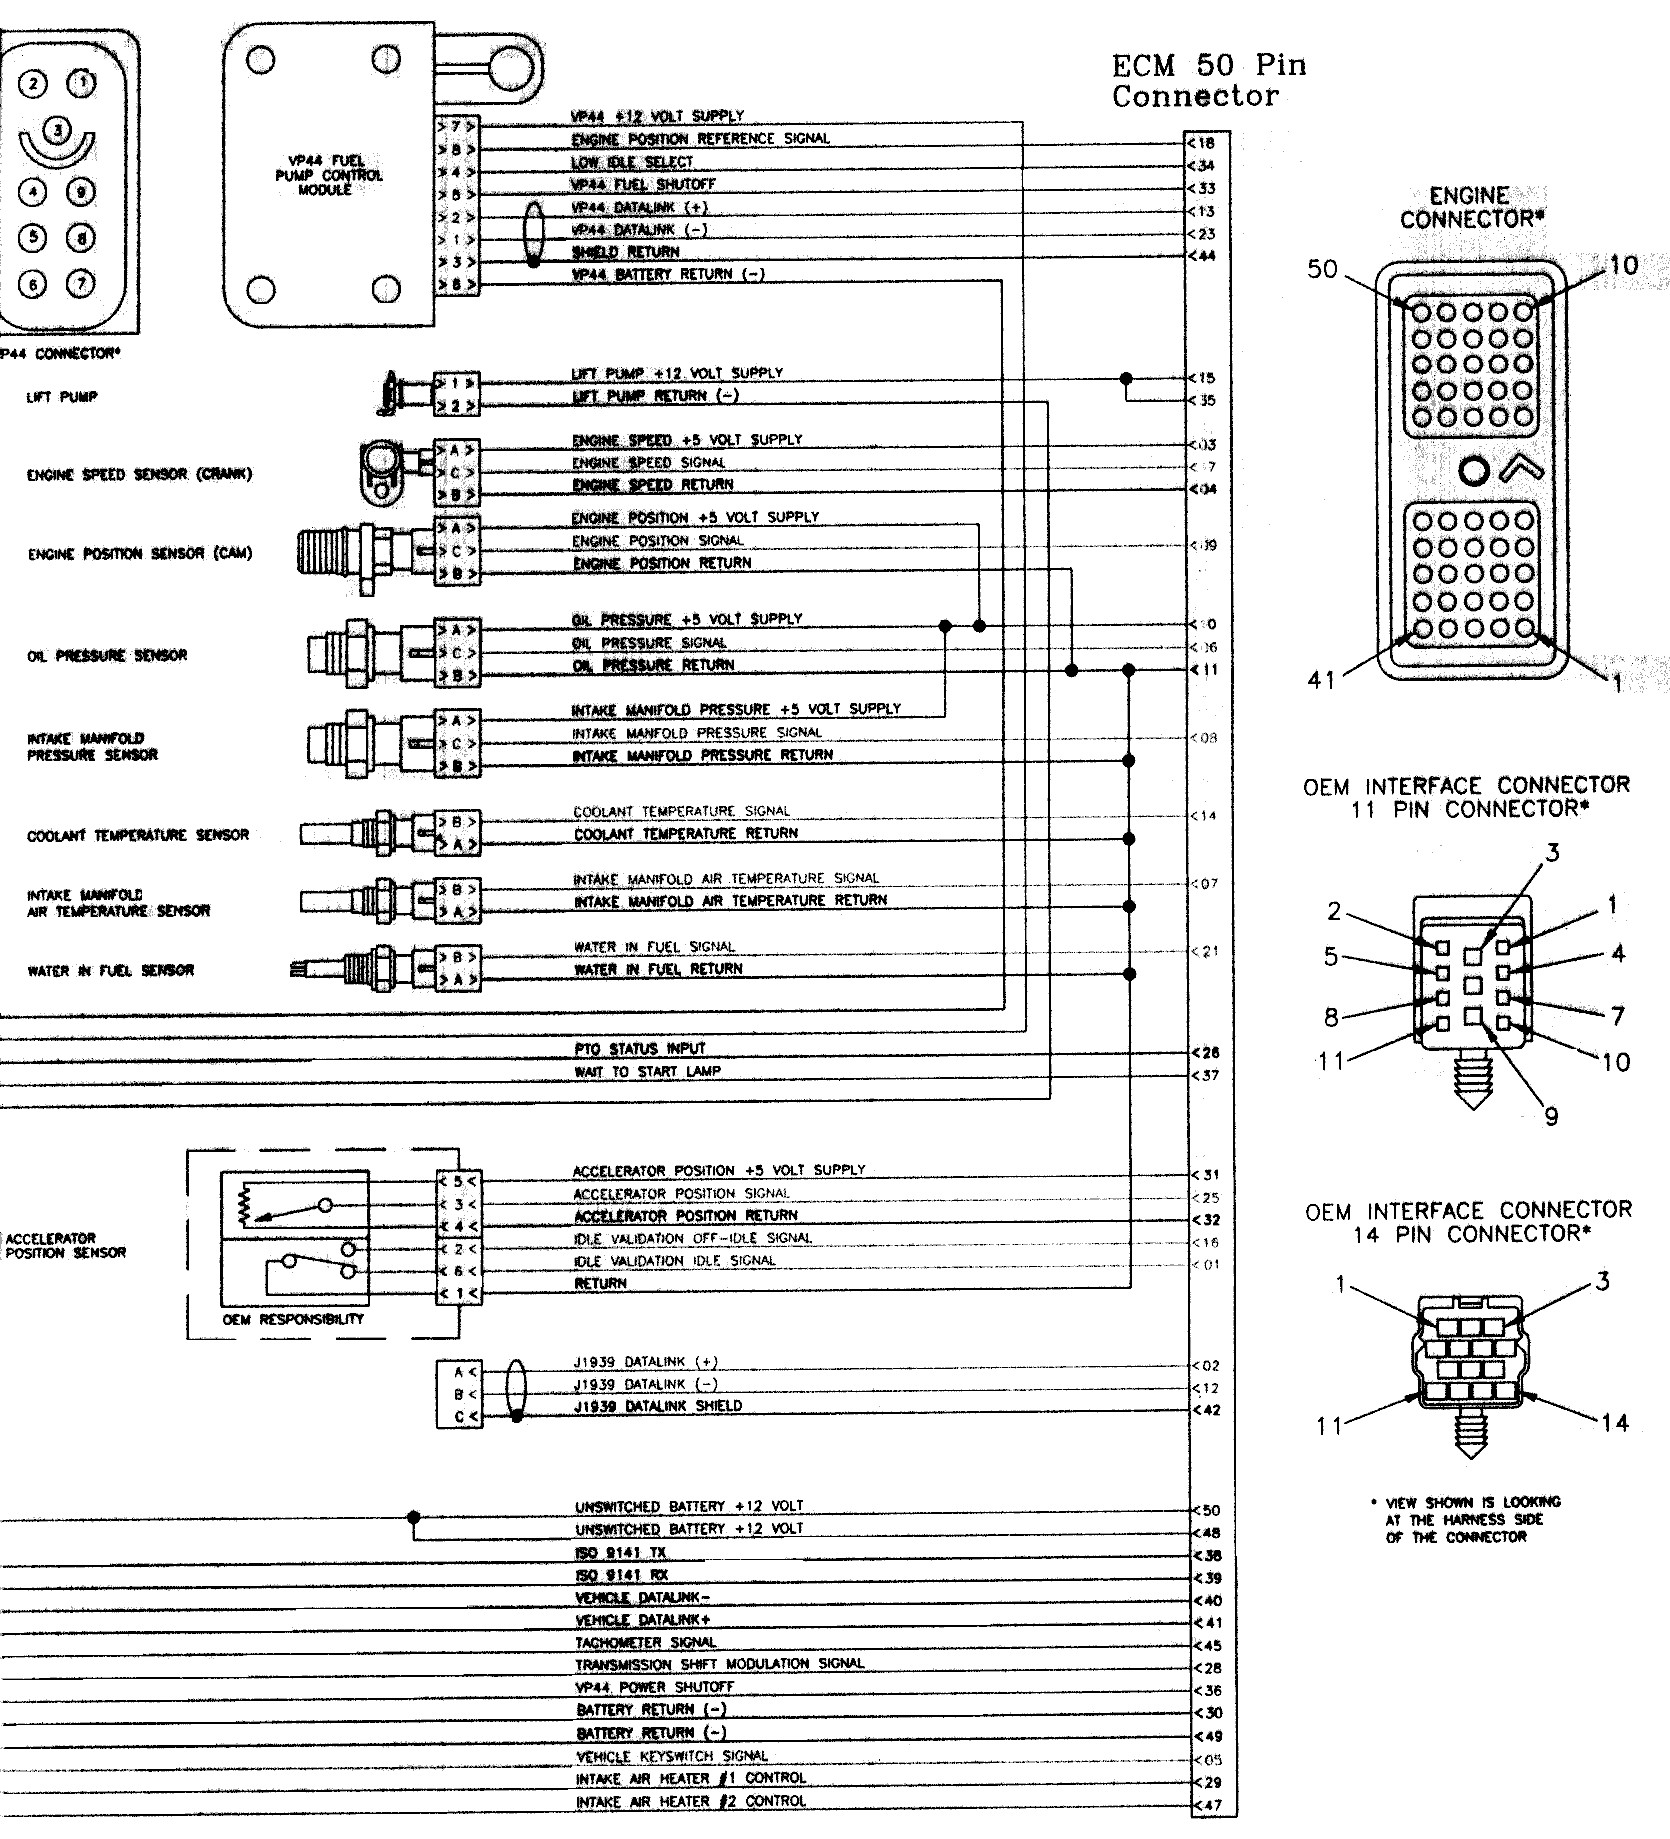 Ijnition Wiring Diagram for 2007 Dodge Ramtruck 99 Dodge Caravan Wiring Diagram Firing Of Ijnition Wiring Diagram for 2007 Dodge Ramtruck